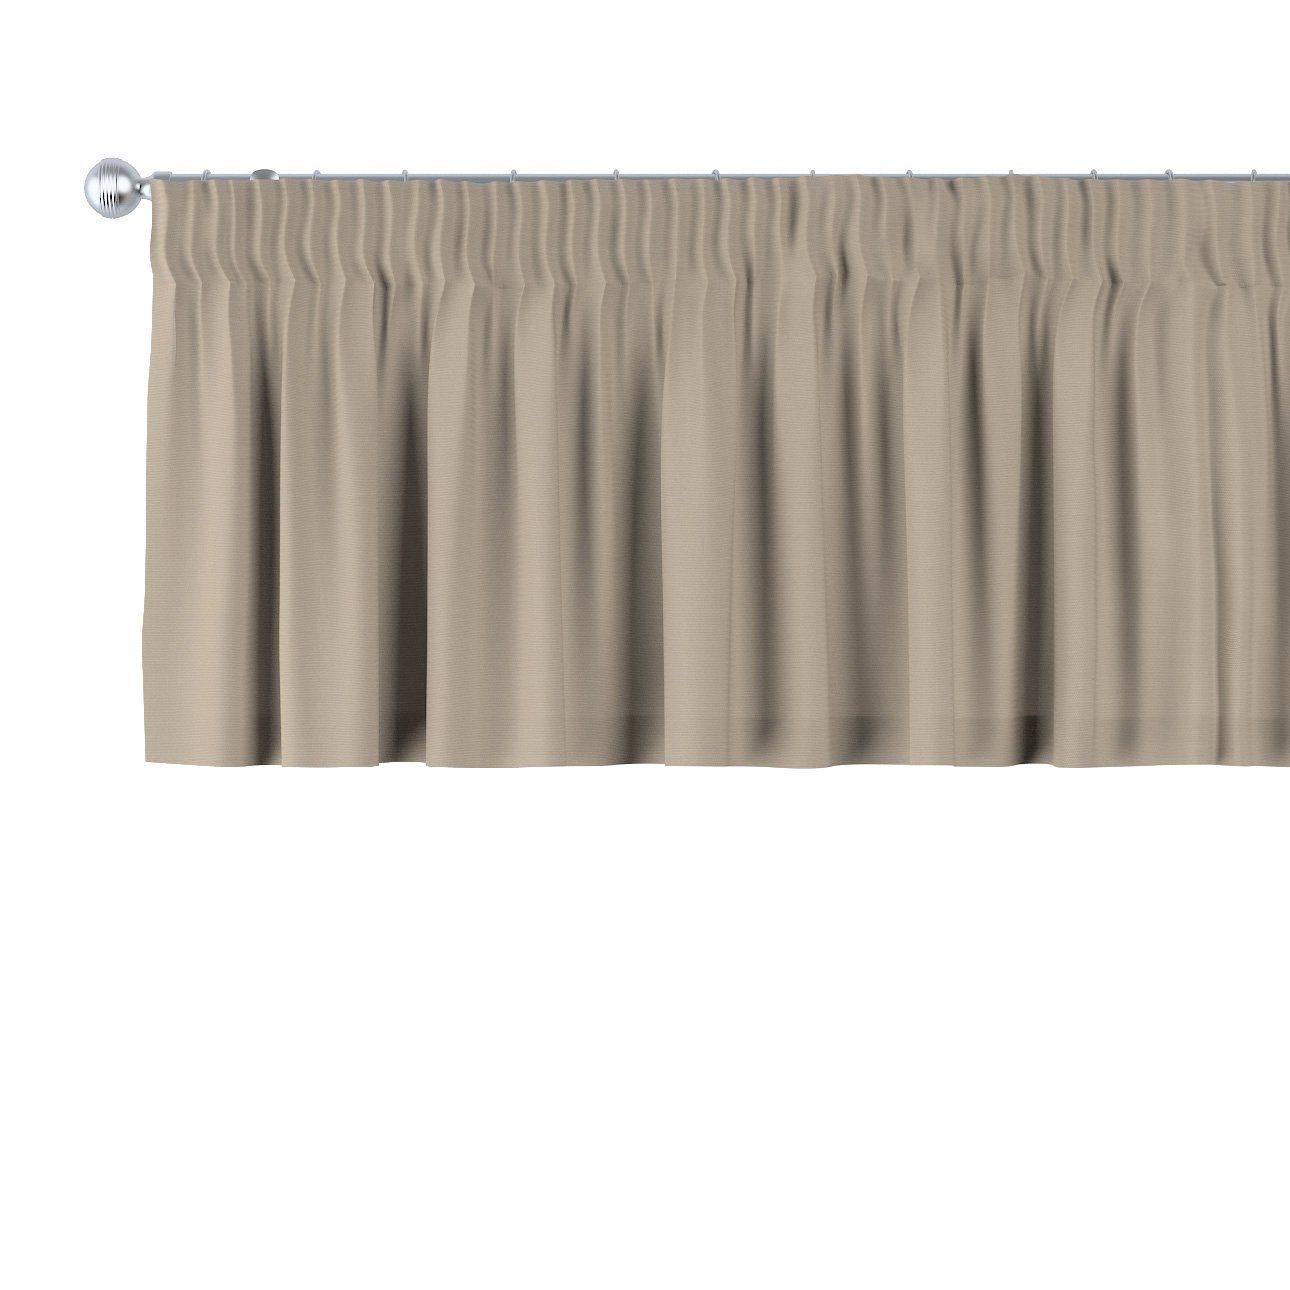 Vorhang mit Kräuselband 130 x 40 cm, Cotton Panama, Dekoria grau-braun | Fertiggardinen